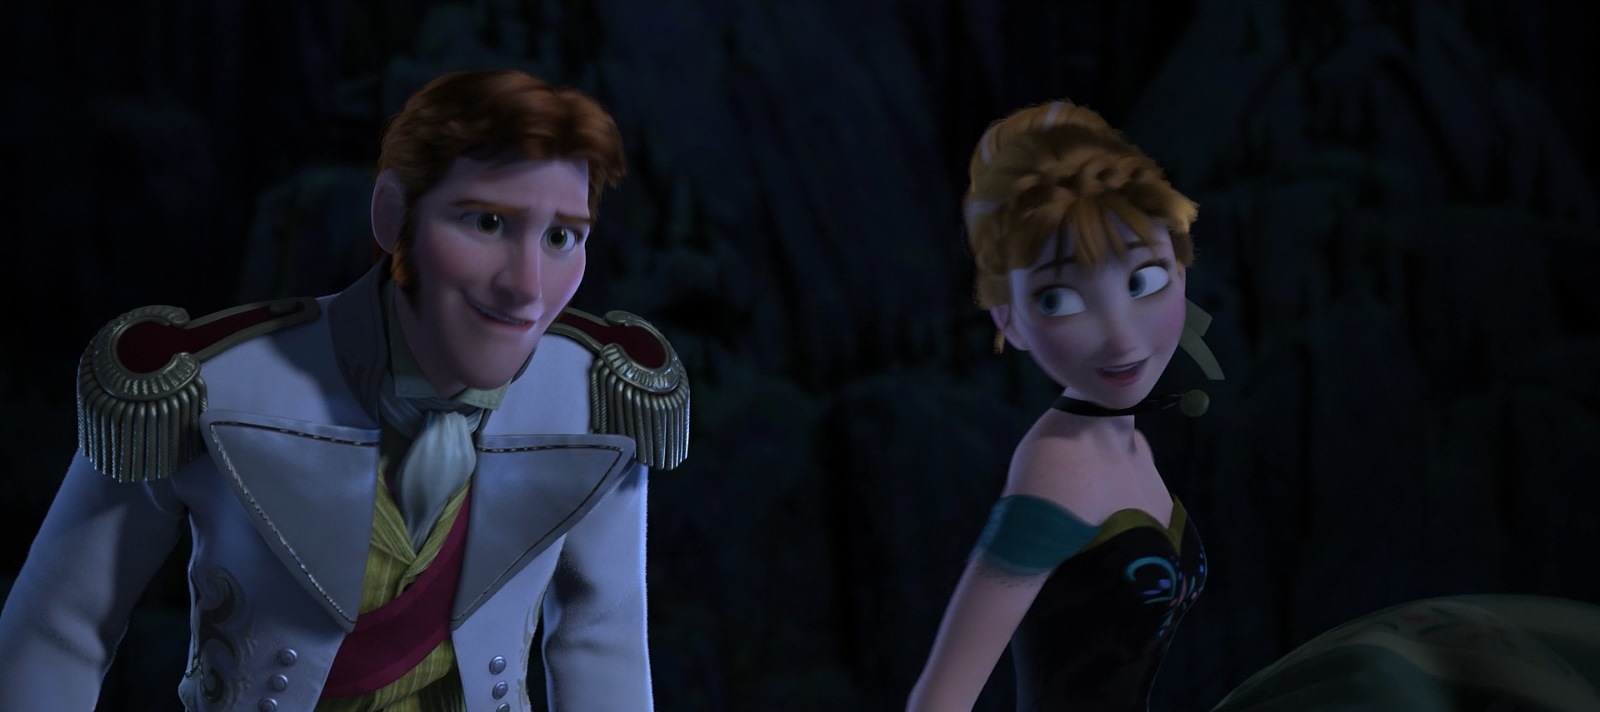 Hans - disney-frozen Photo  Frozen hans, Cartoon man, Disney frozen